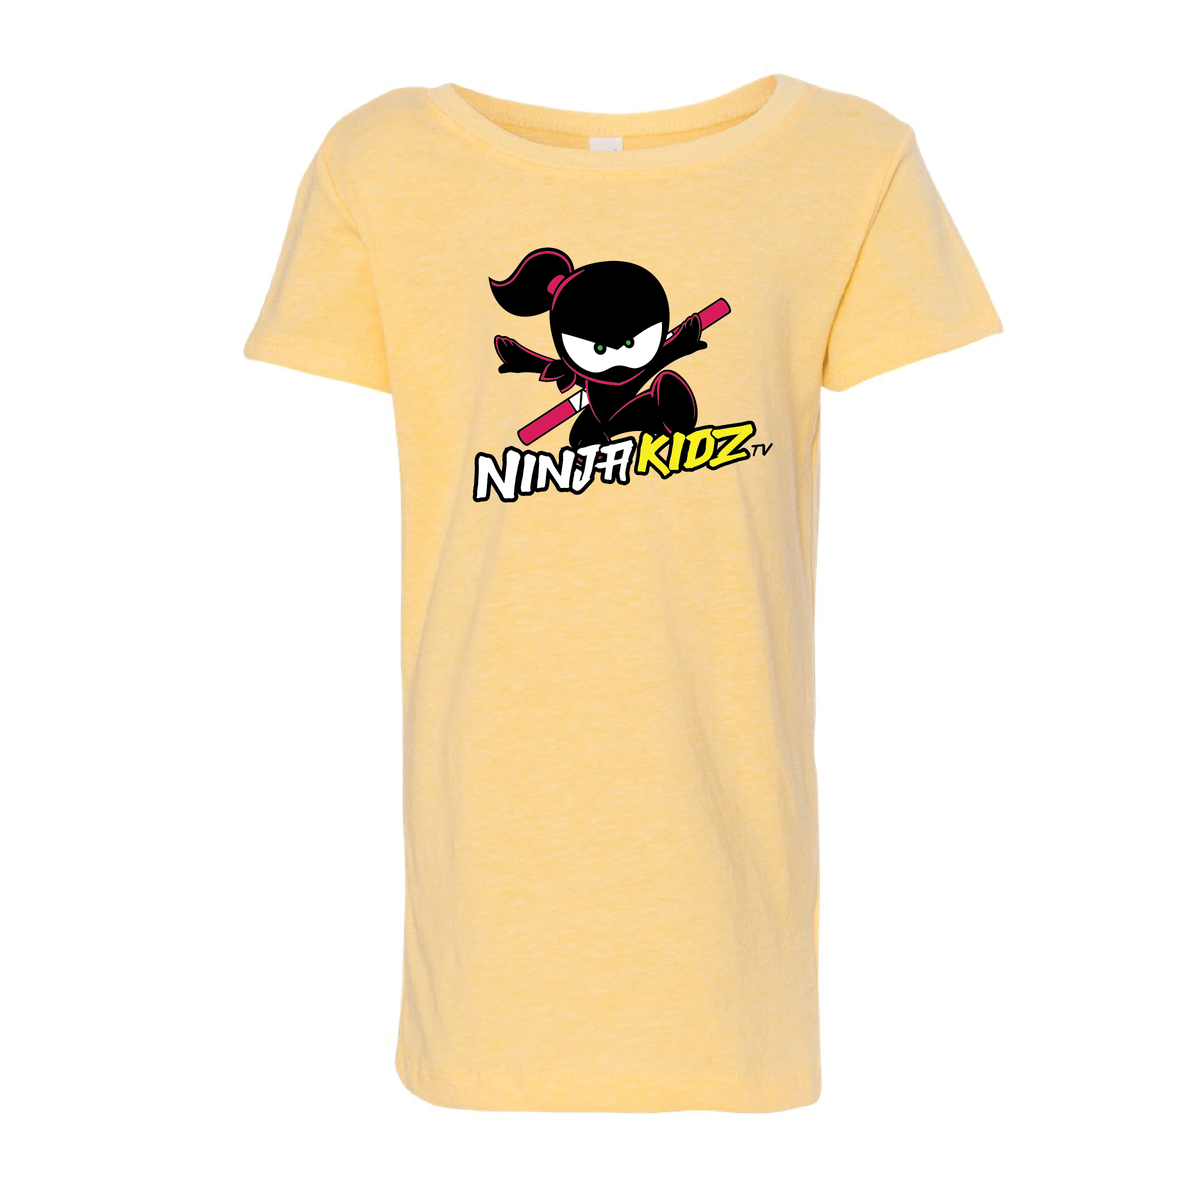 Ninja Script T Shirt 3.0 © – Ninja Kidz TV